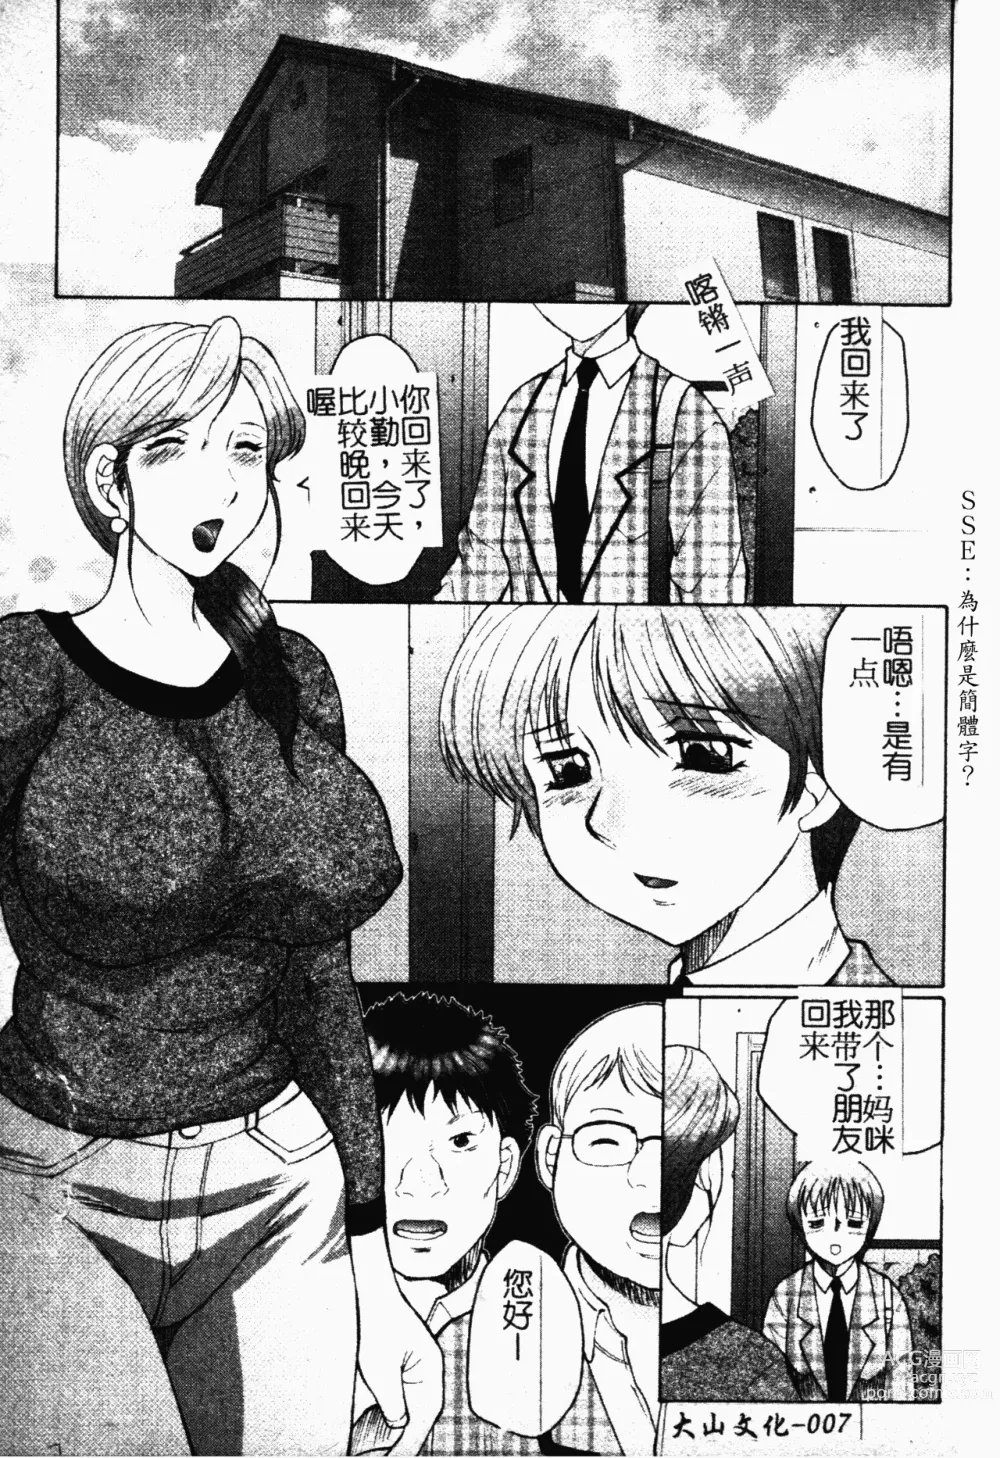 Page 7 of manga Haha Mamire